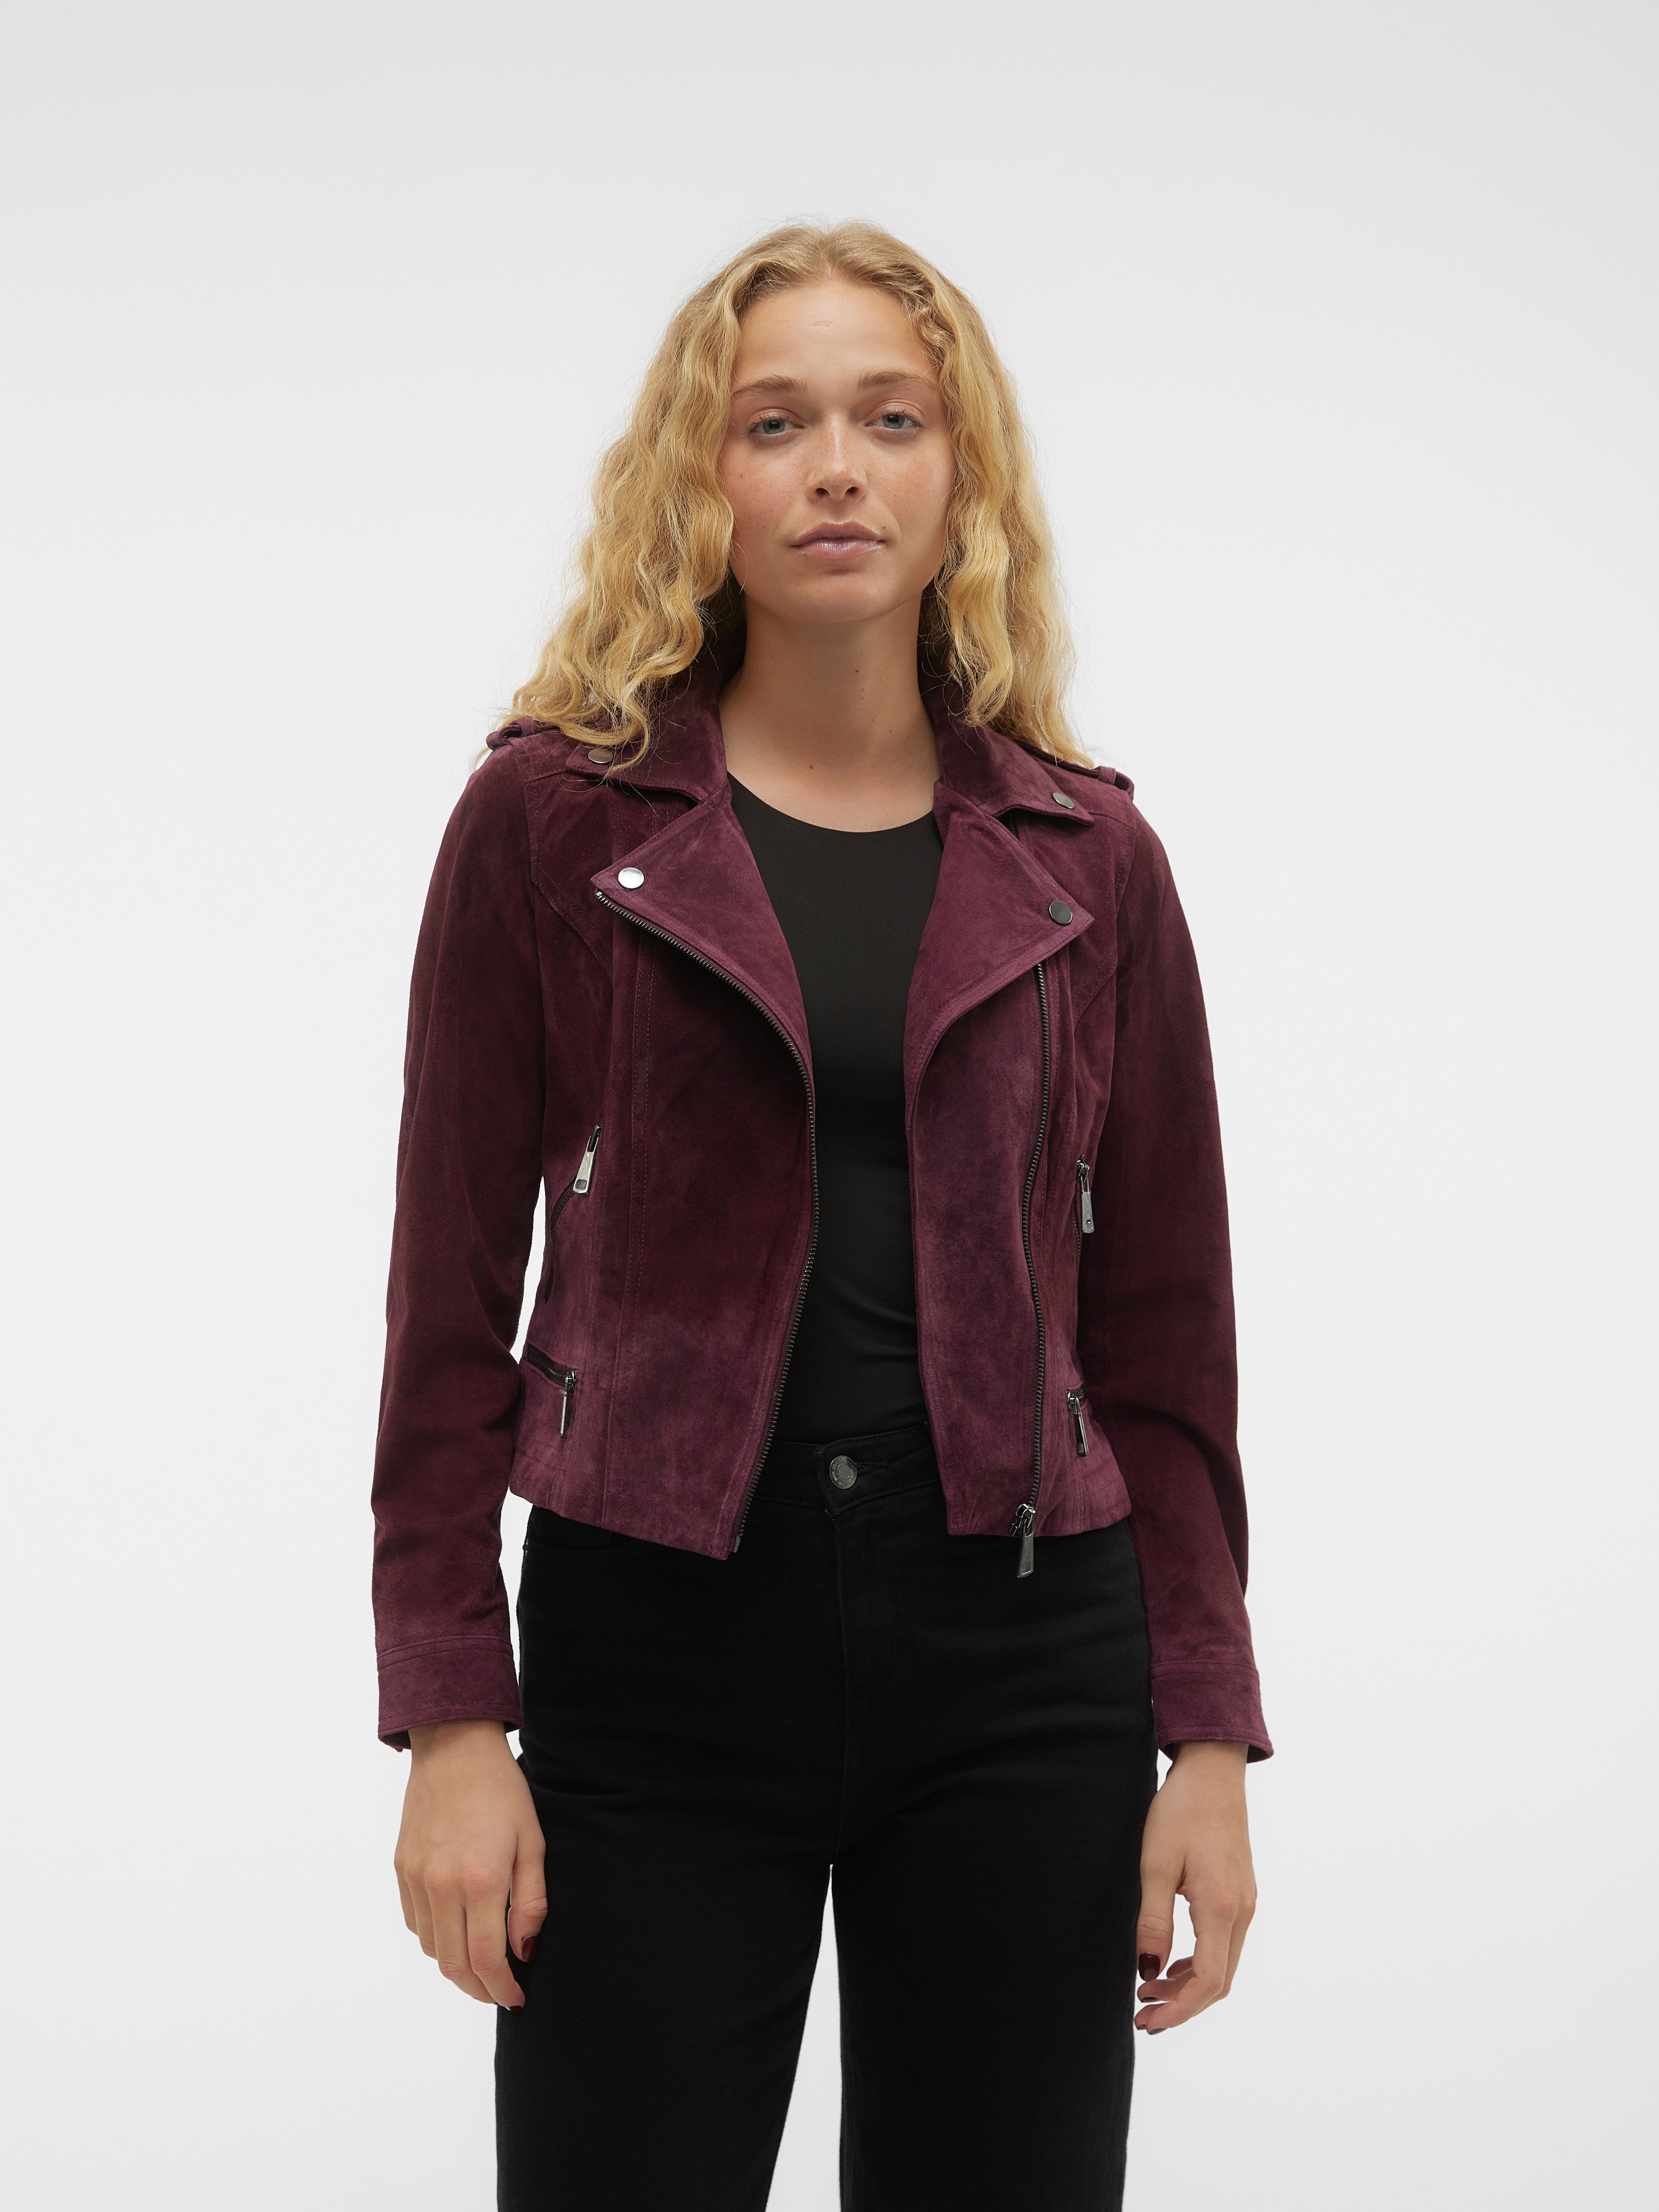 Vero Moda Favo Faux Leather Jacket in Tan | iCLOTHING - iCLOTHING